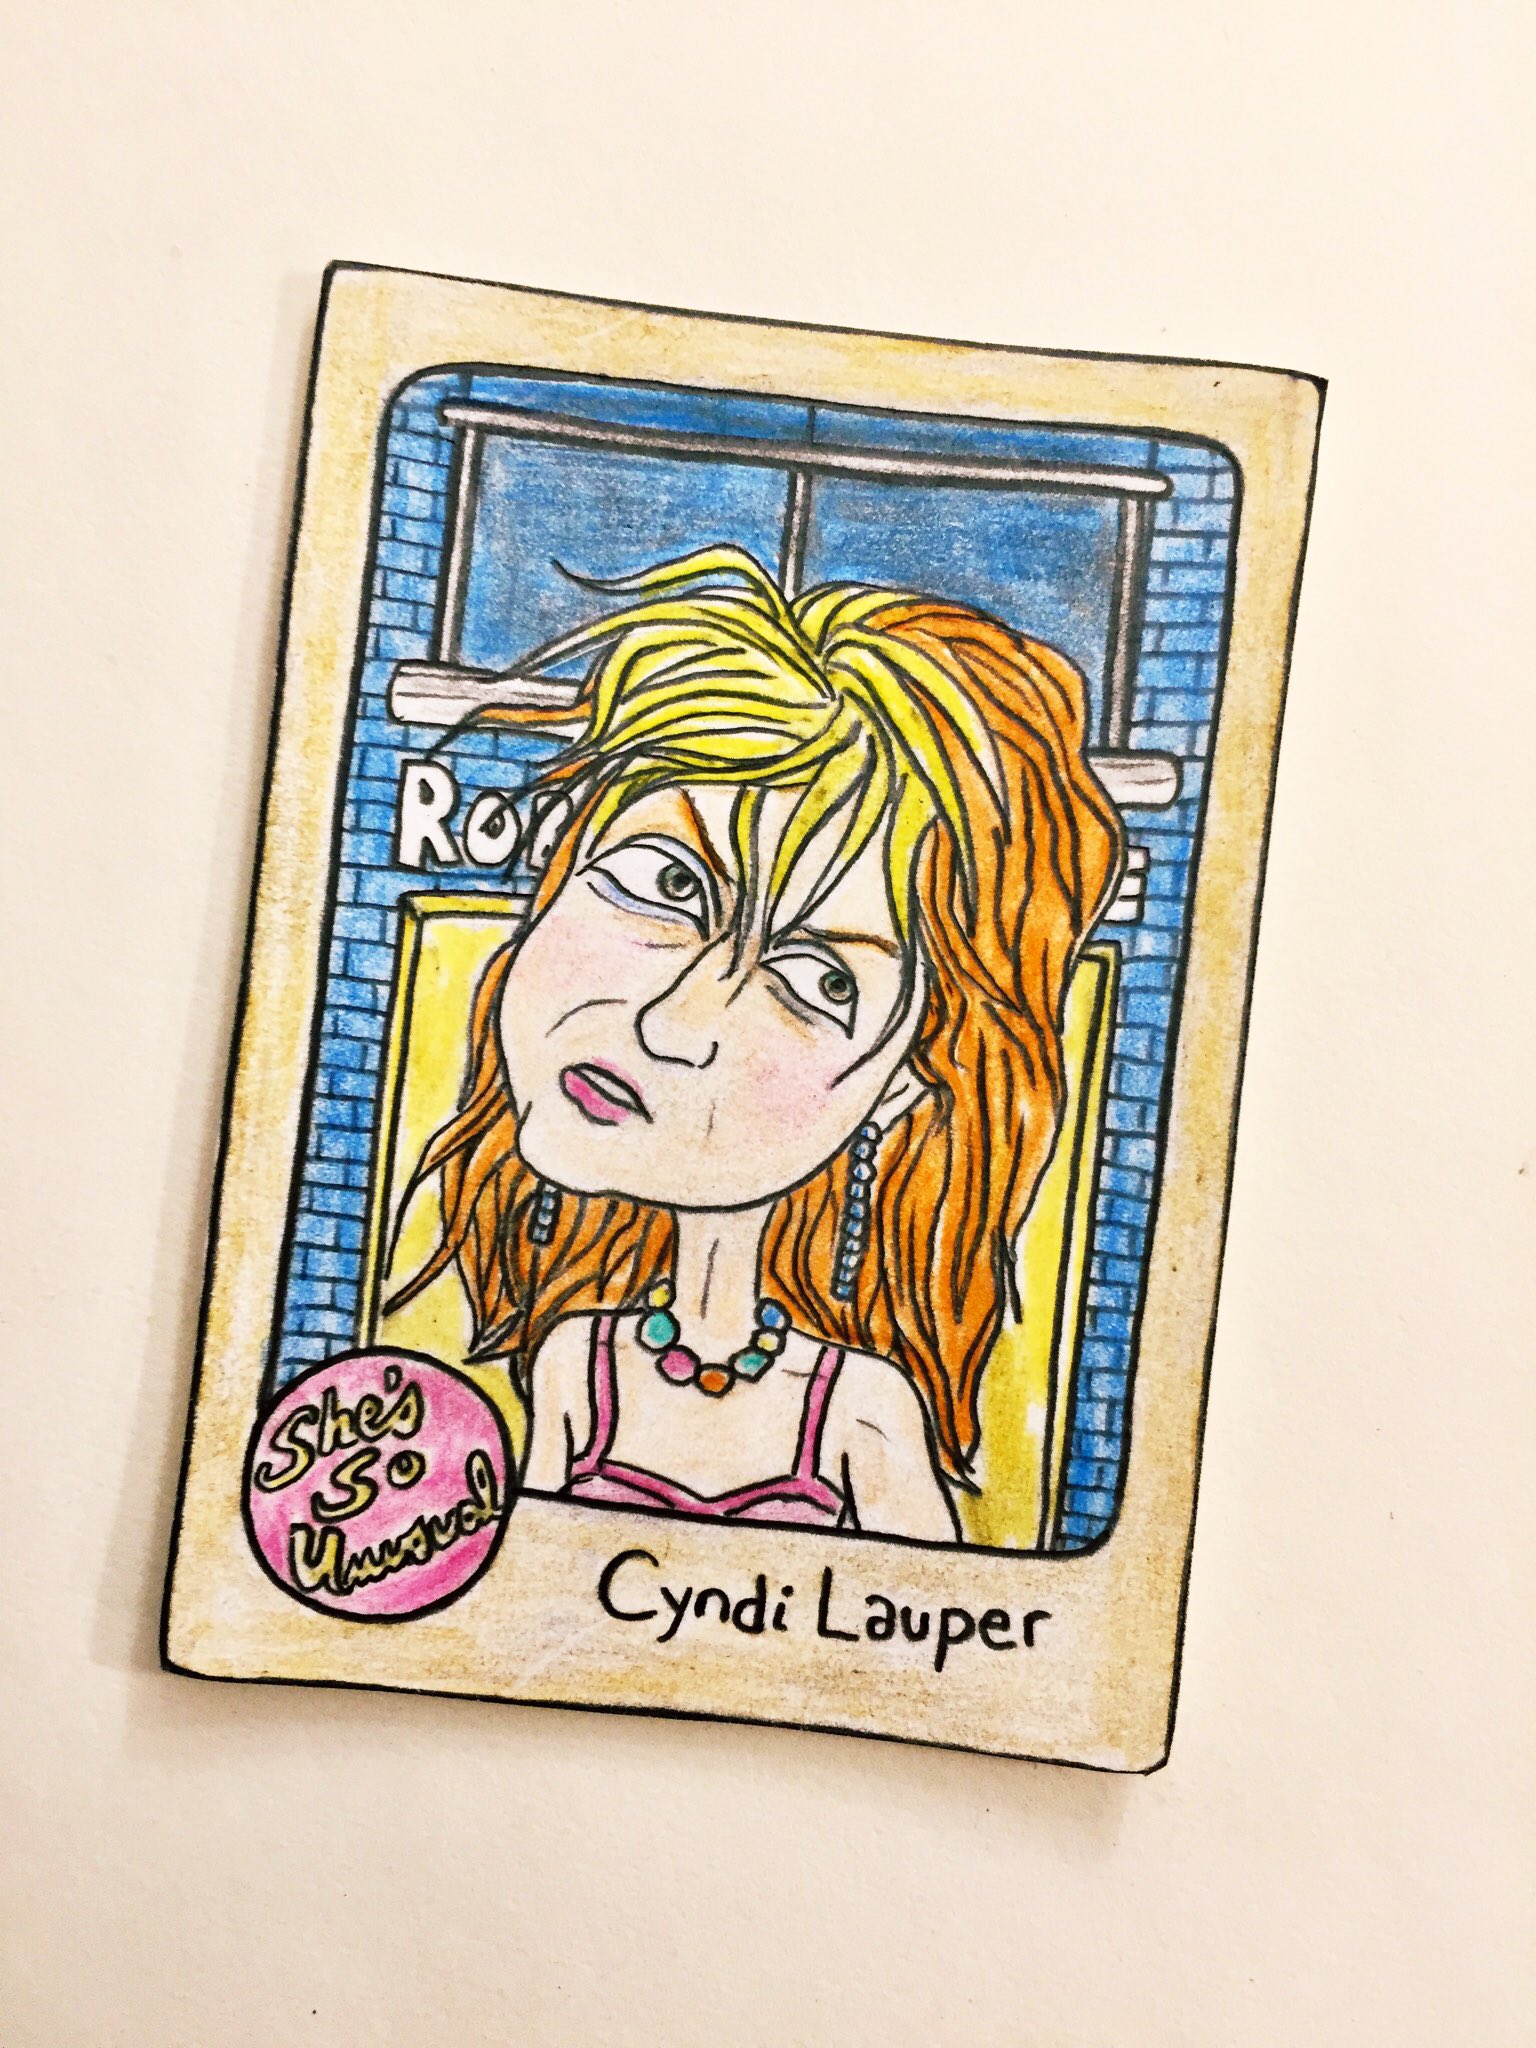 Happy birthday, Cyndi Lauper! 